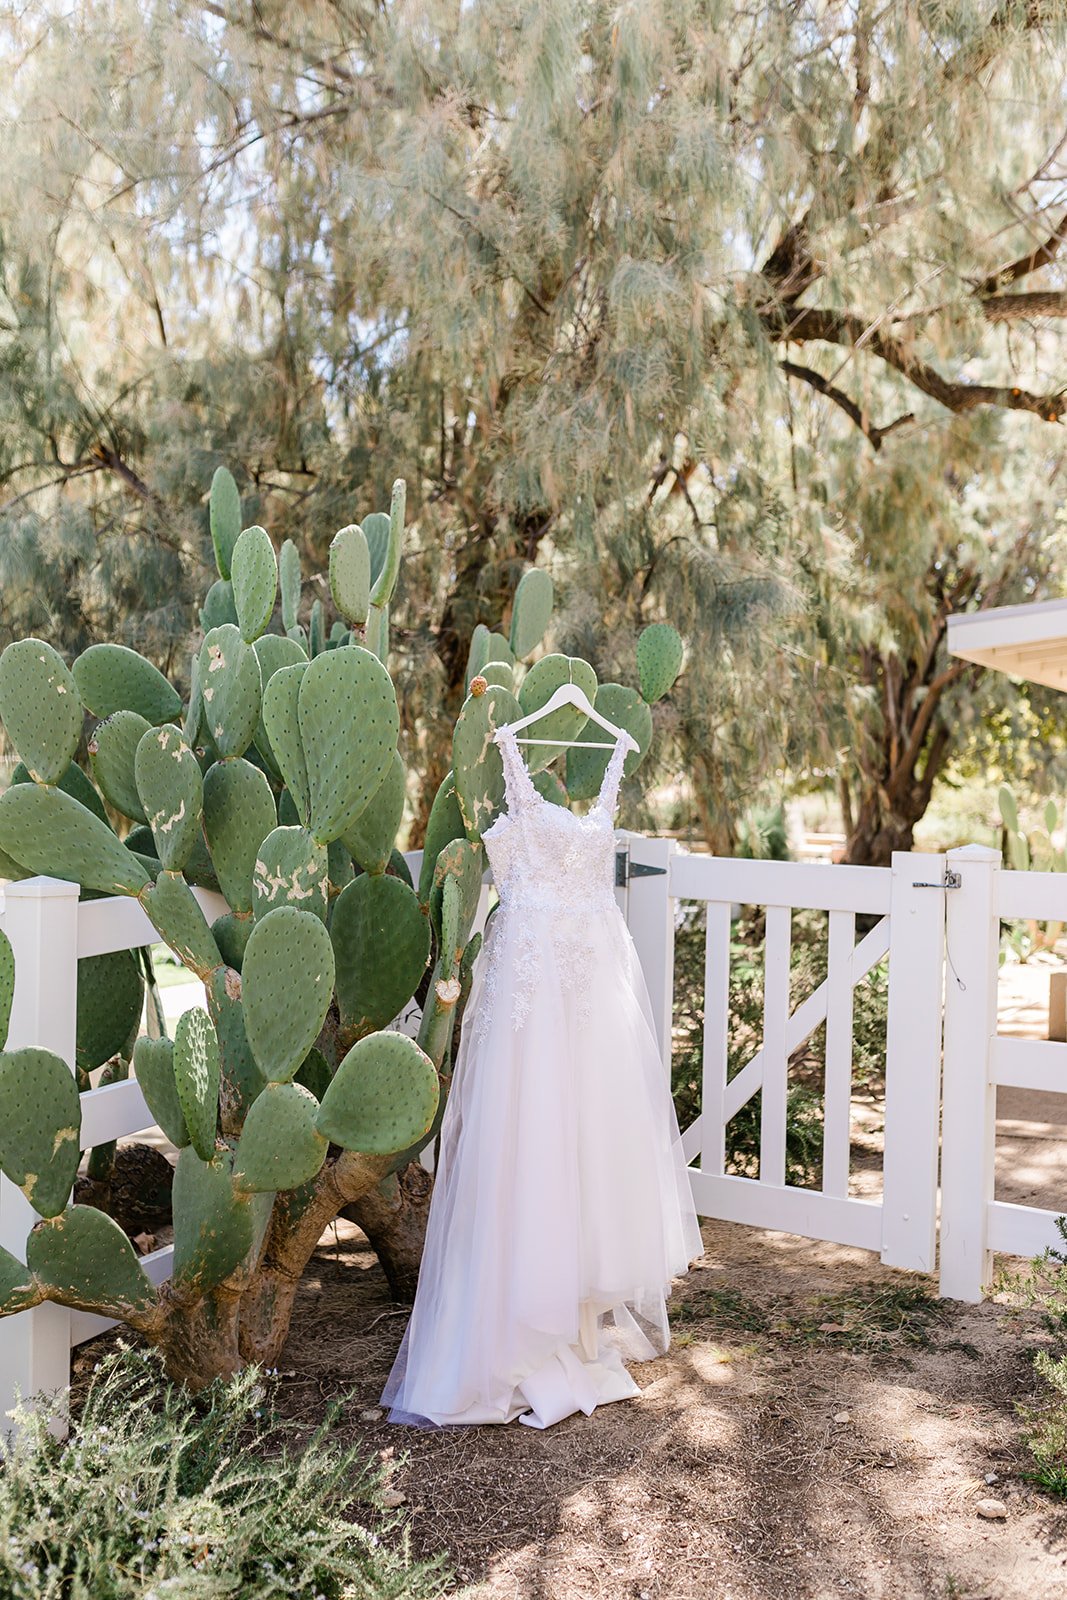 Wedding dress at Tesoro Adobe Historic Park in Santa Clarita